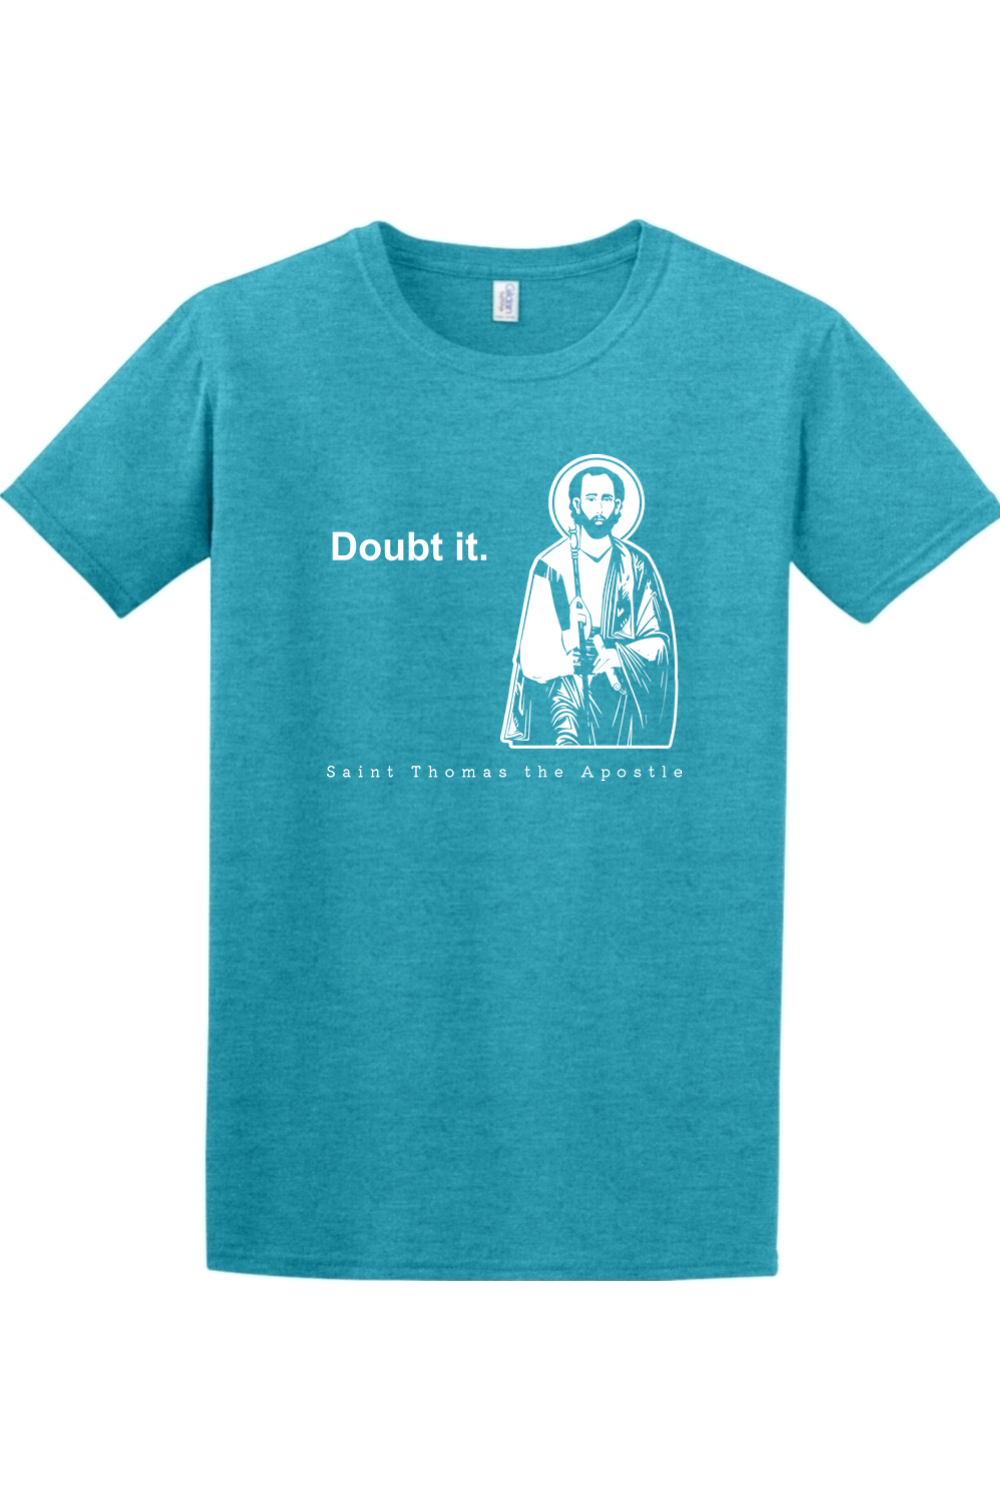 Doubt it - St. Thomas the Apostle Adult T-Shirt